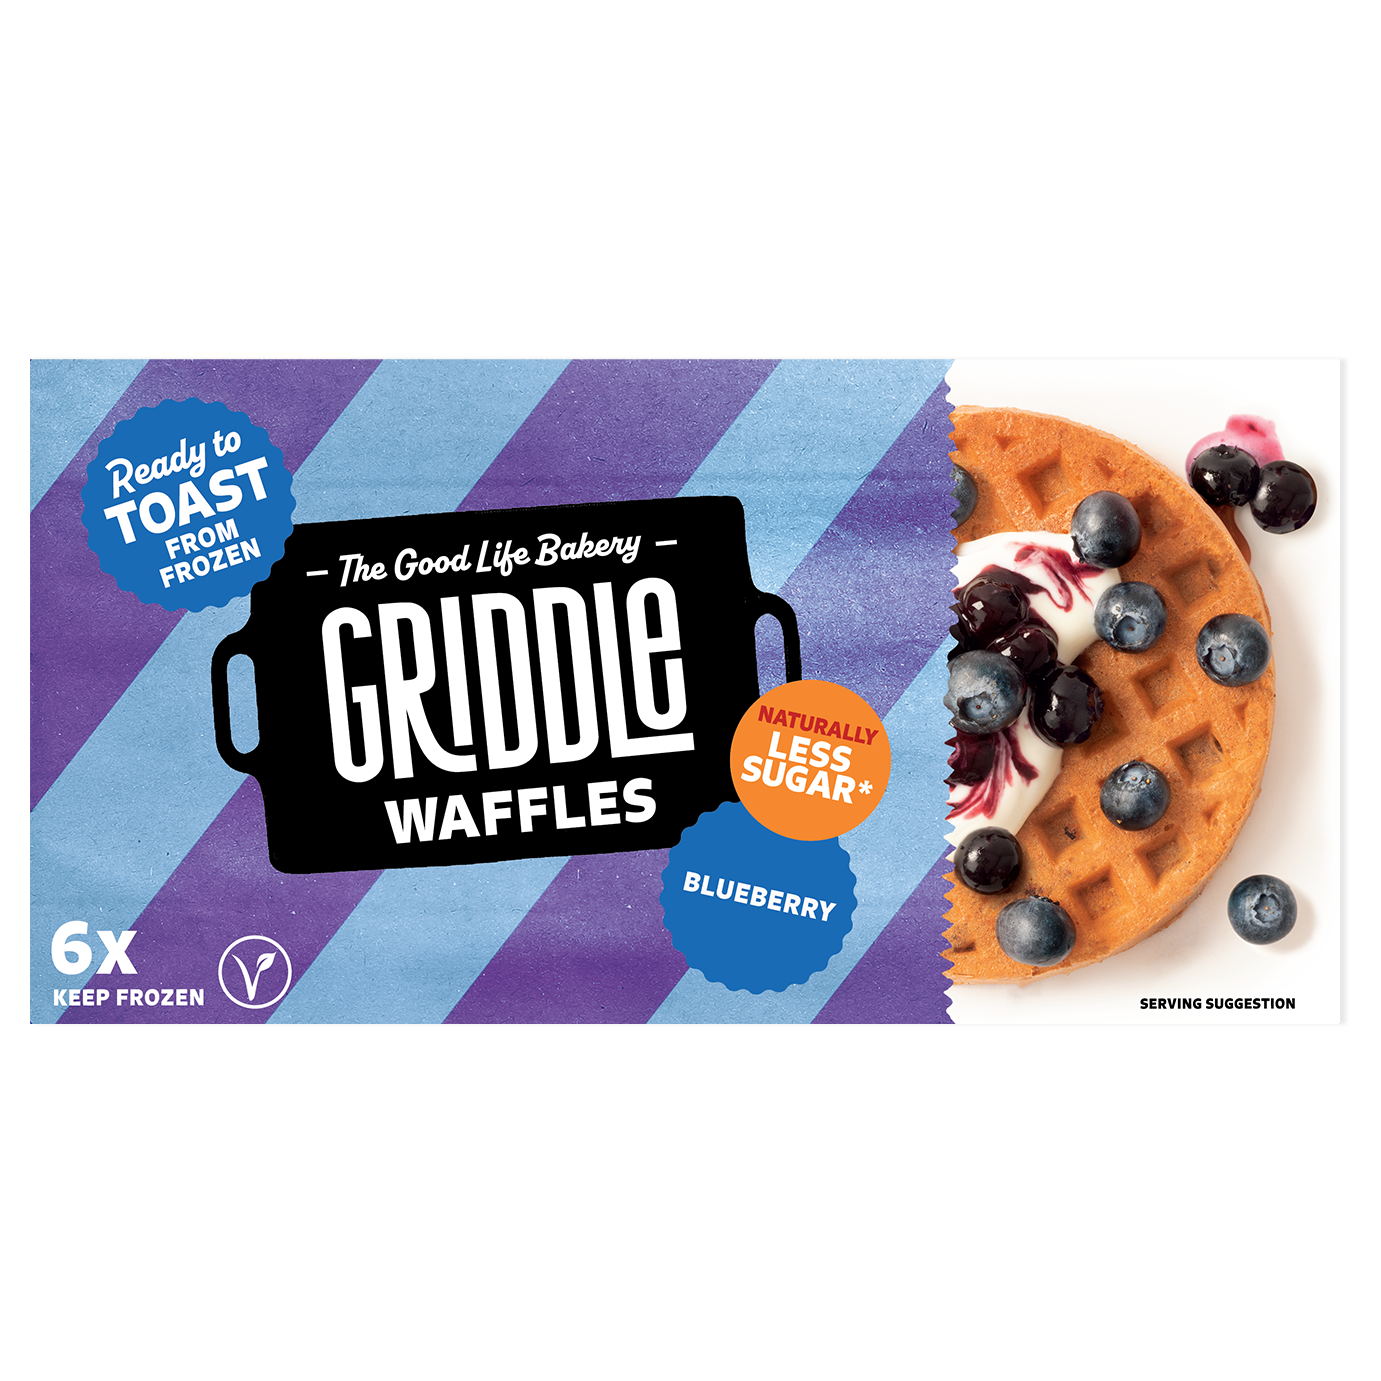 Griddle Blueberry Wholegrain Waffles 192g